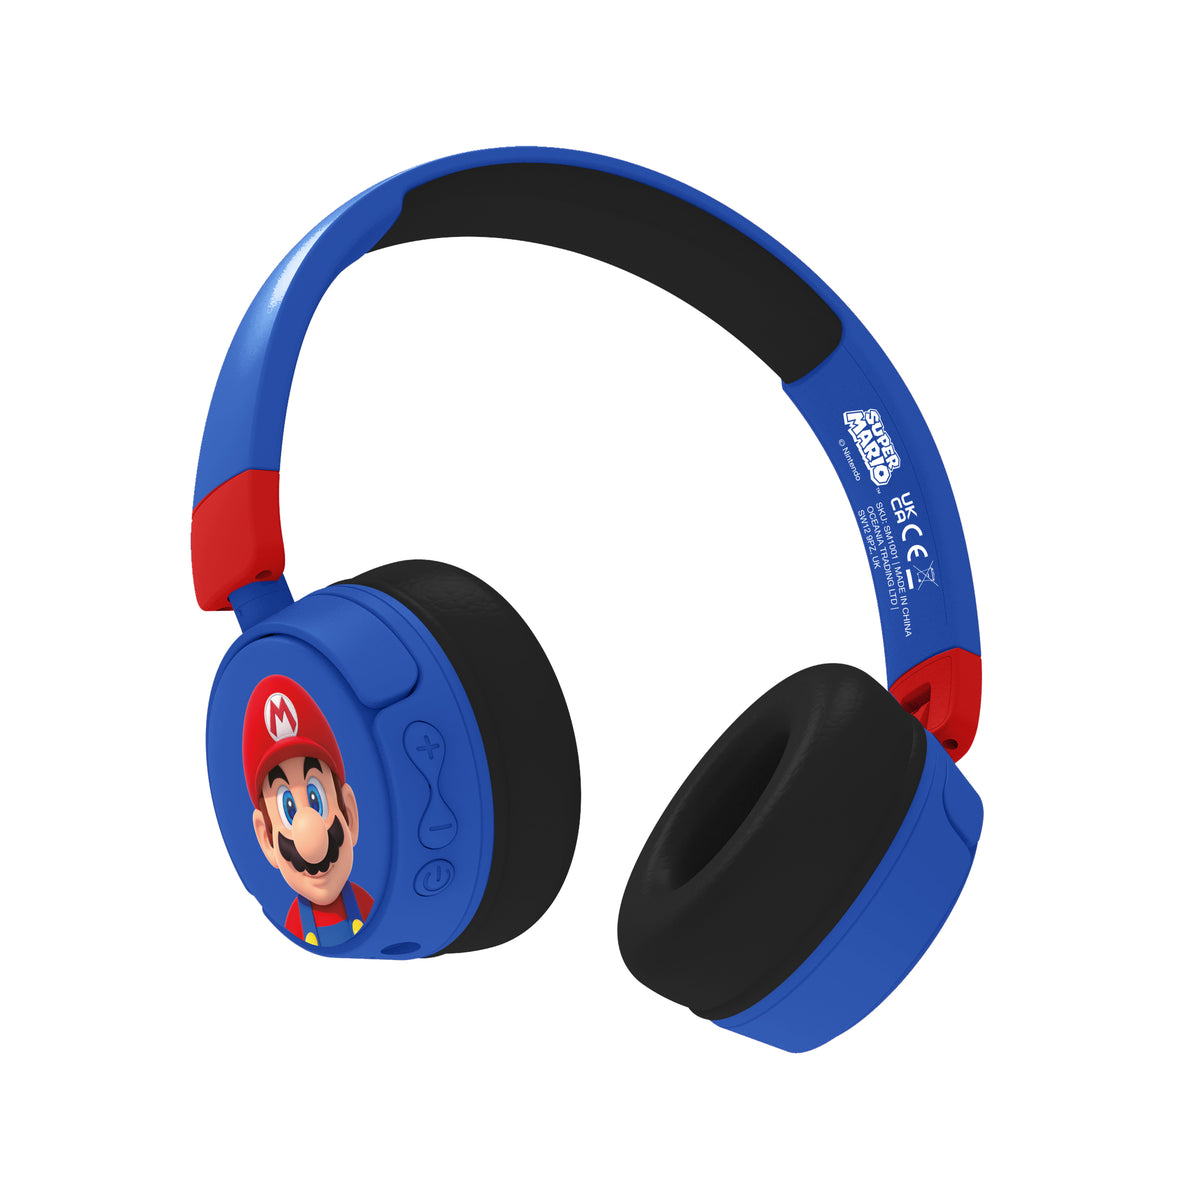 OTL Super Mario Kids Over-Ear Wireless Headphone - Blue | SM1001 from OTL - DID Electrical